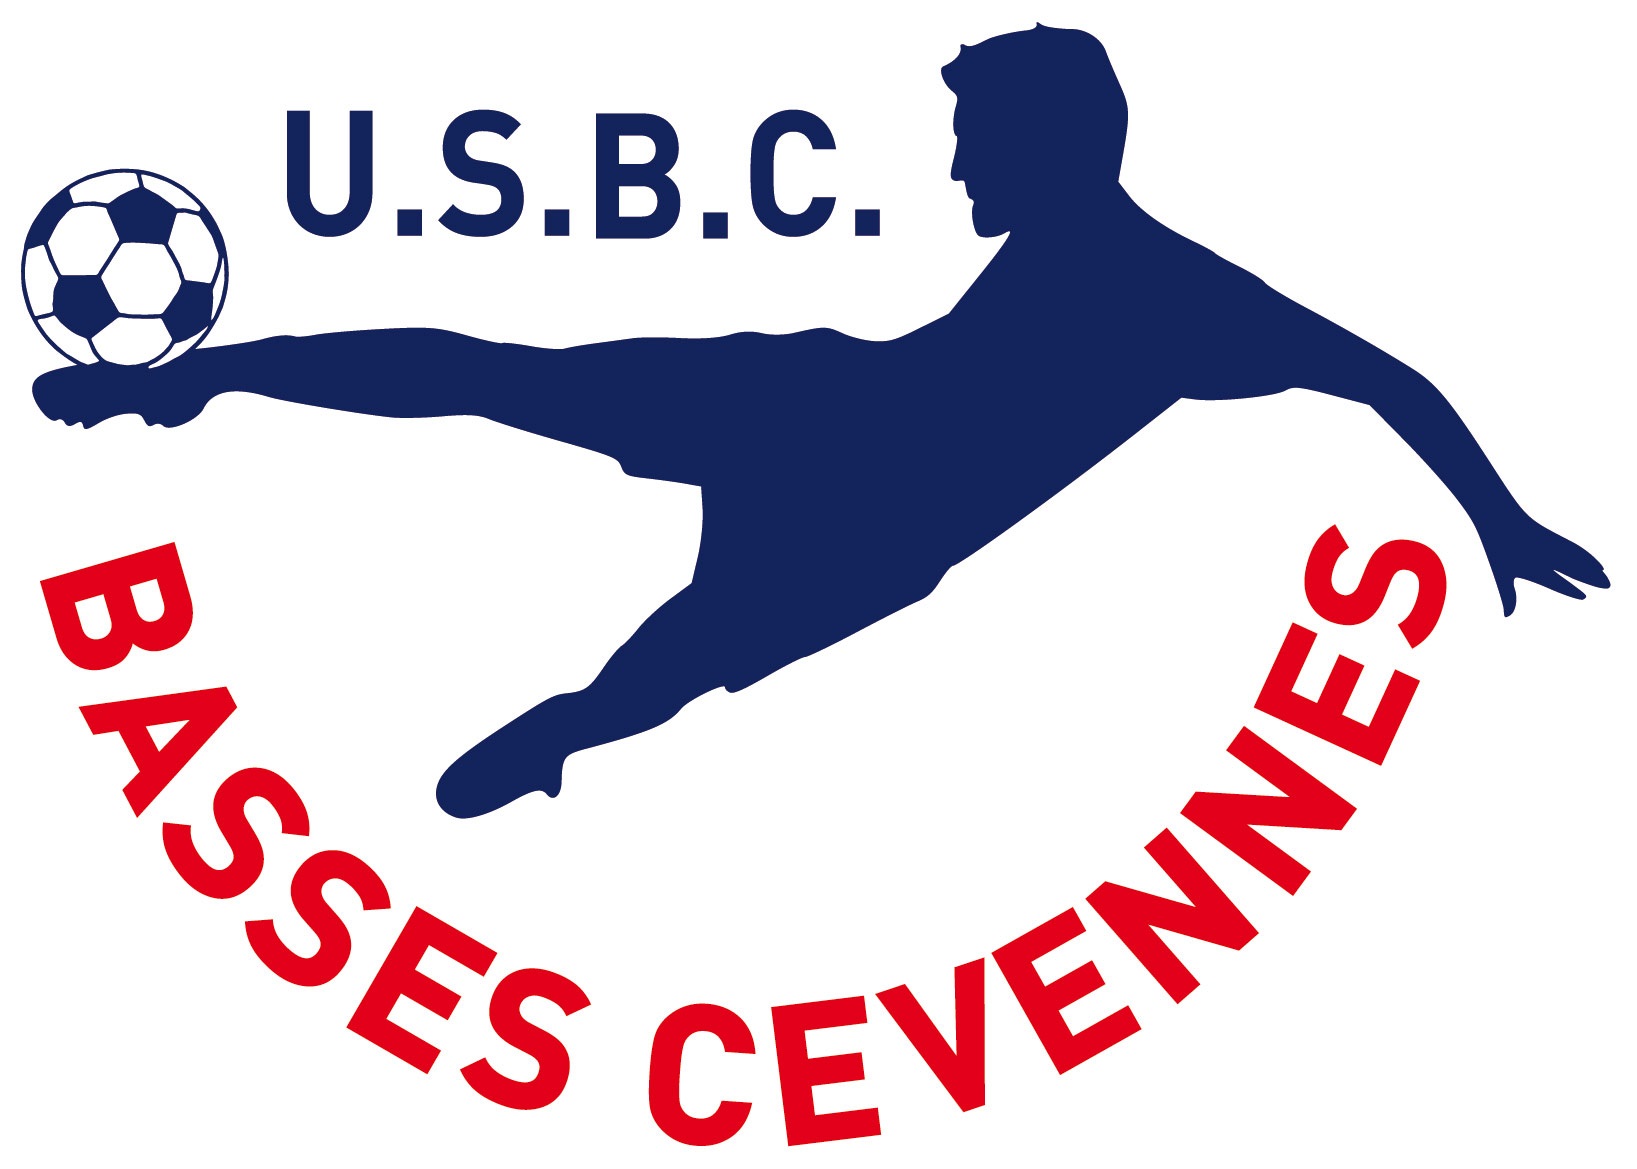 actualit u00e9 - le nouveau logo de l u0026 39 usbc - club football union sportive basses cevennes